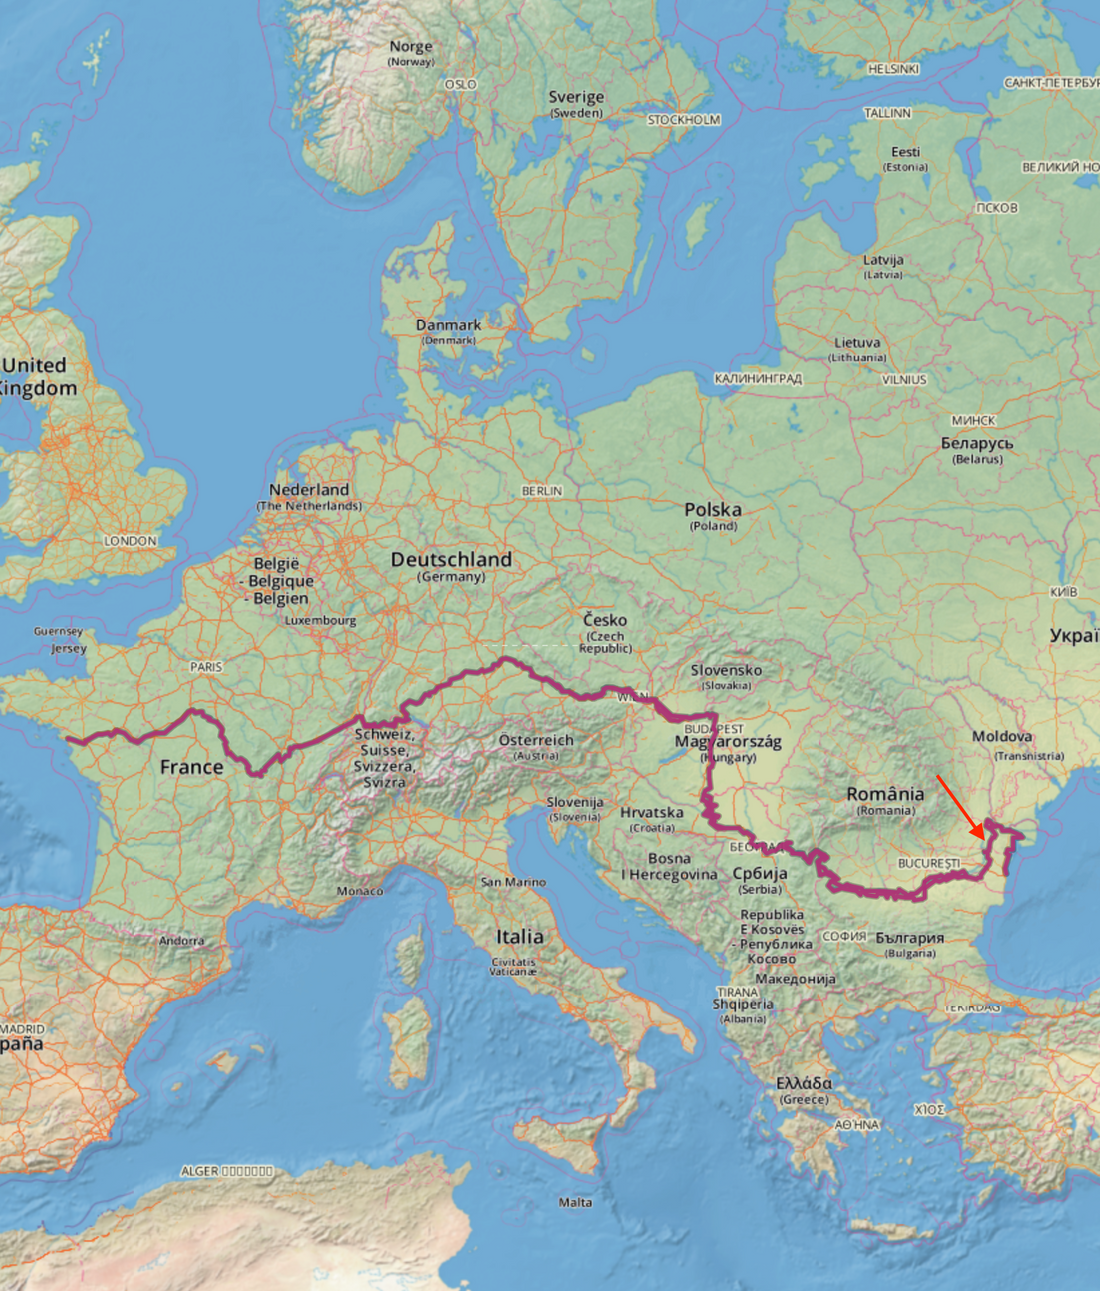 EuroVelo 6 route in Europe